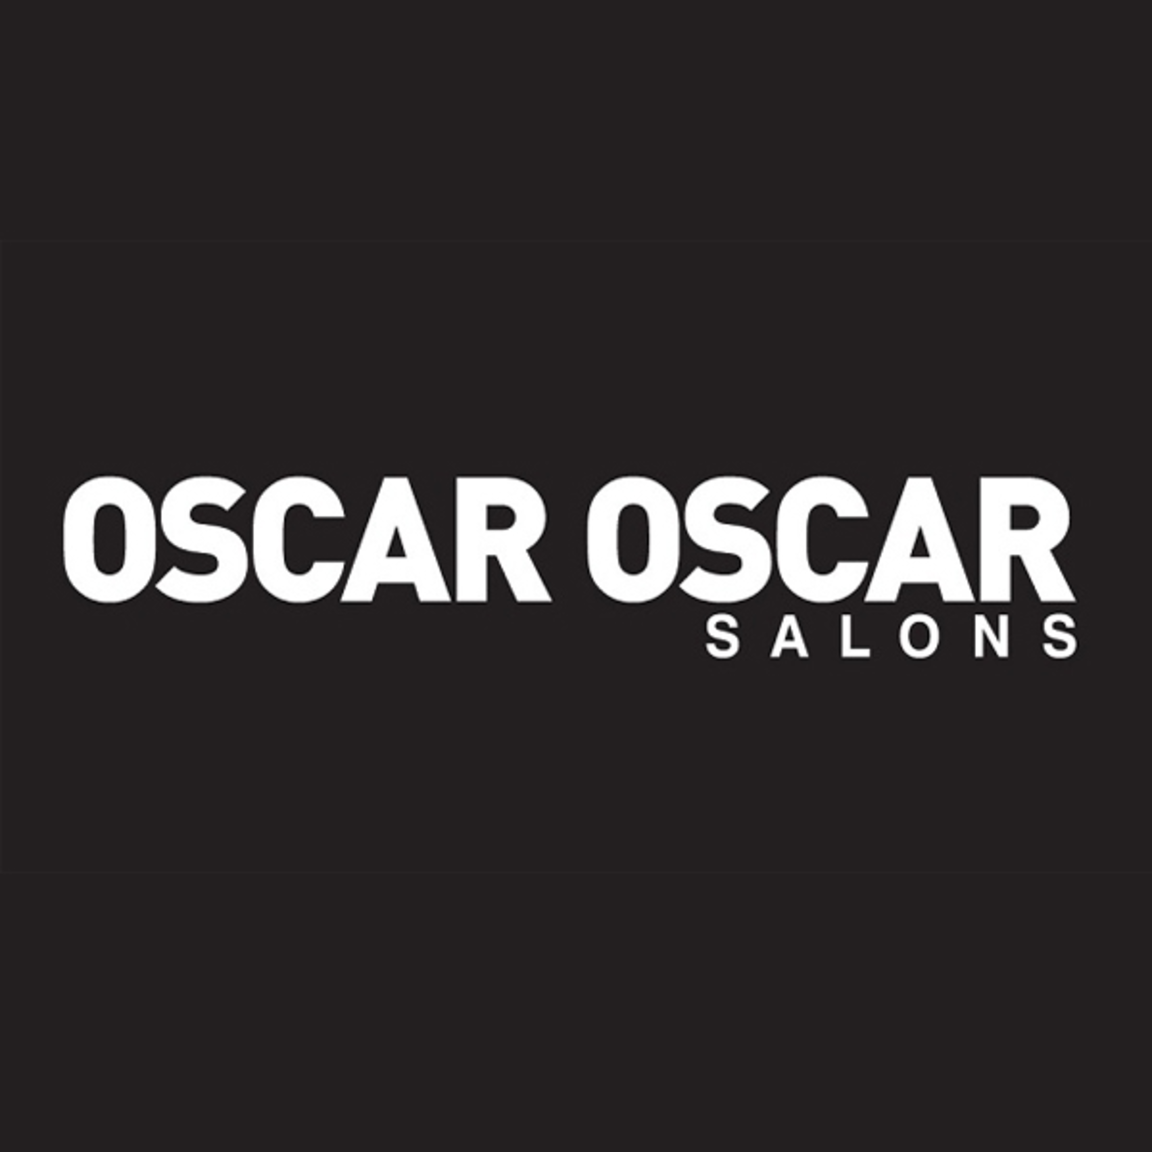 Oscar Oscar Salons at Westfield Southland